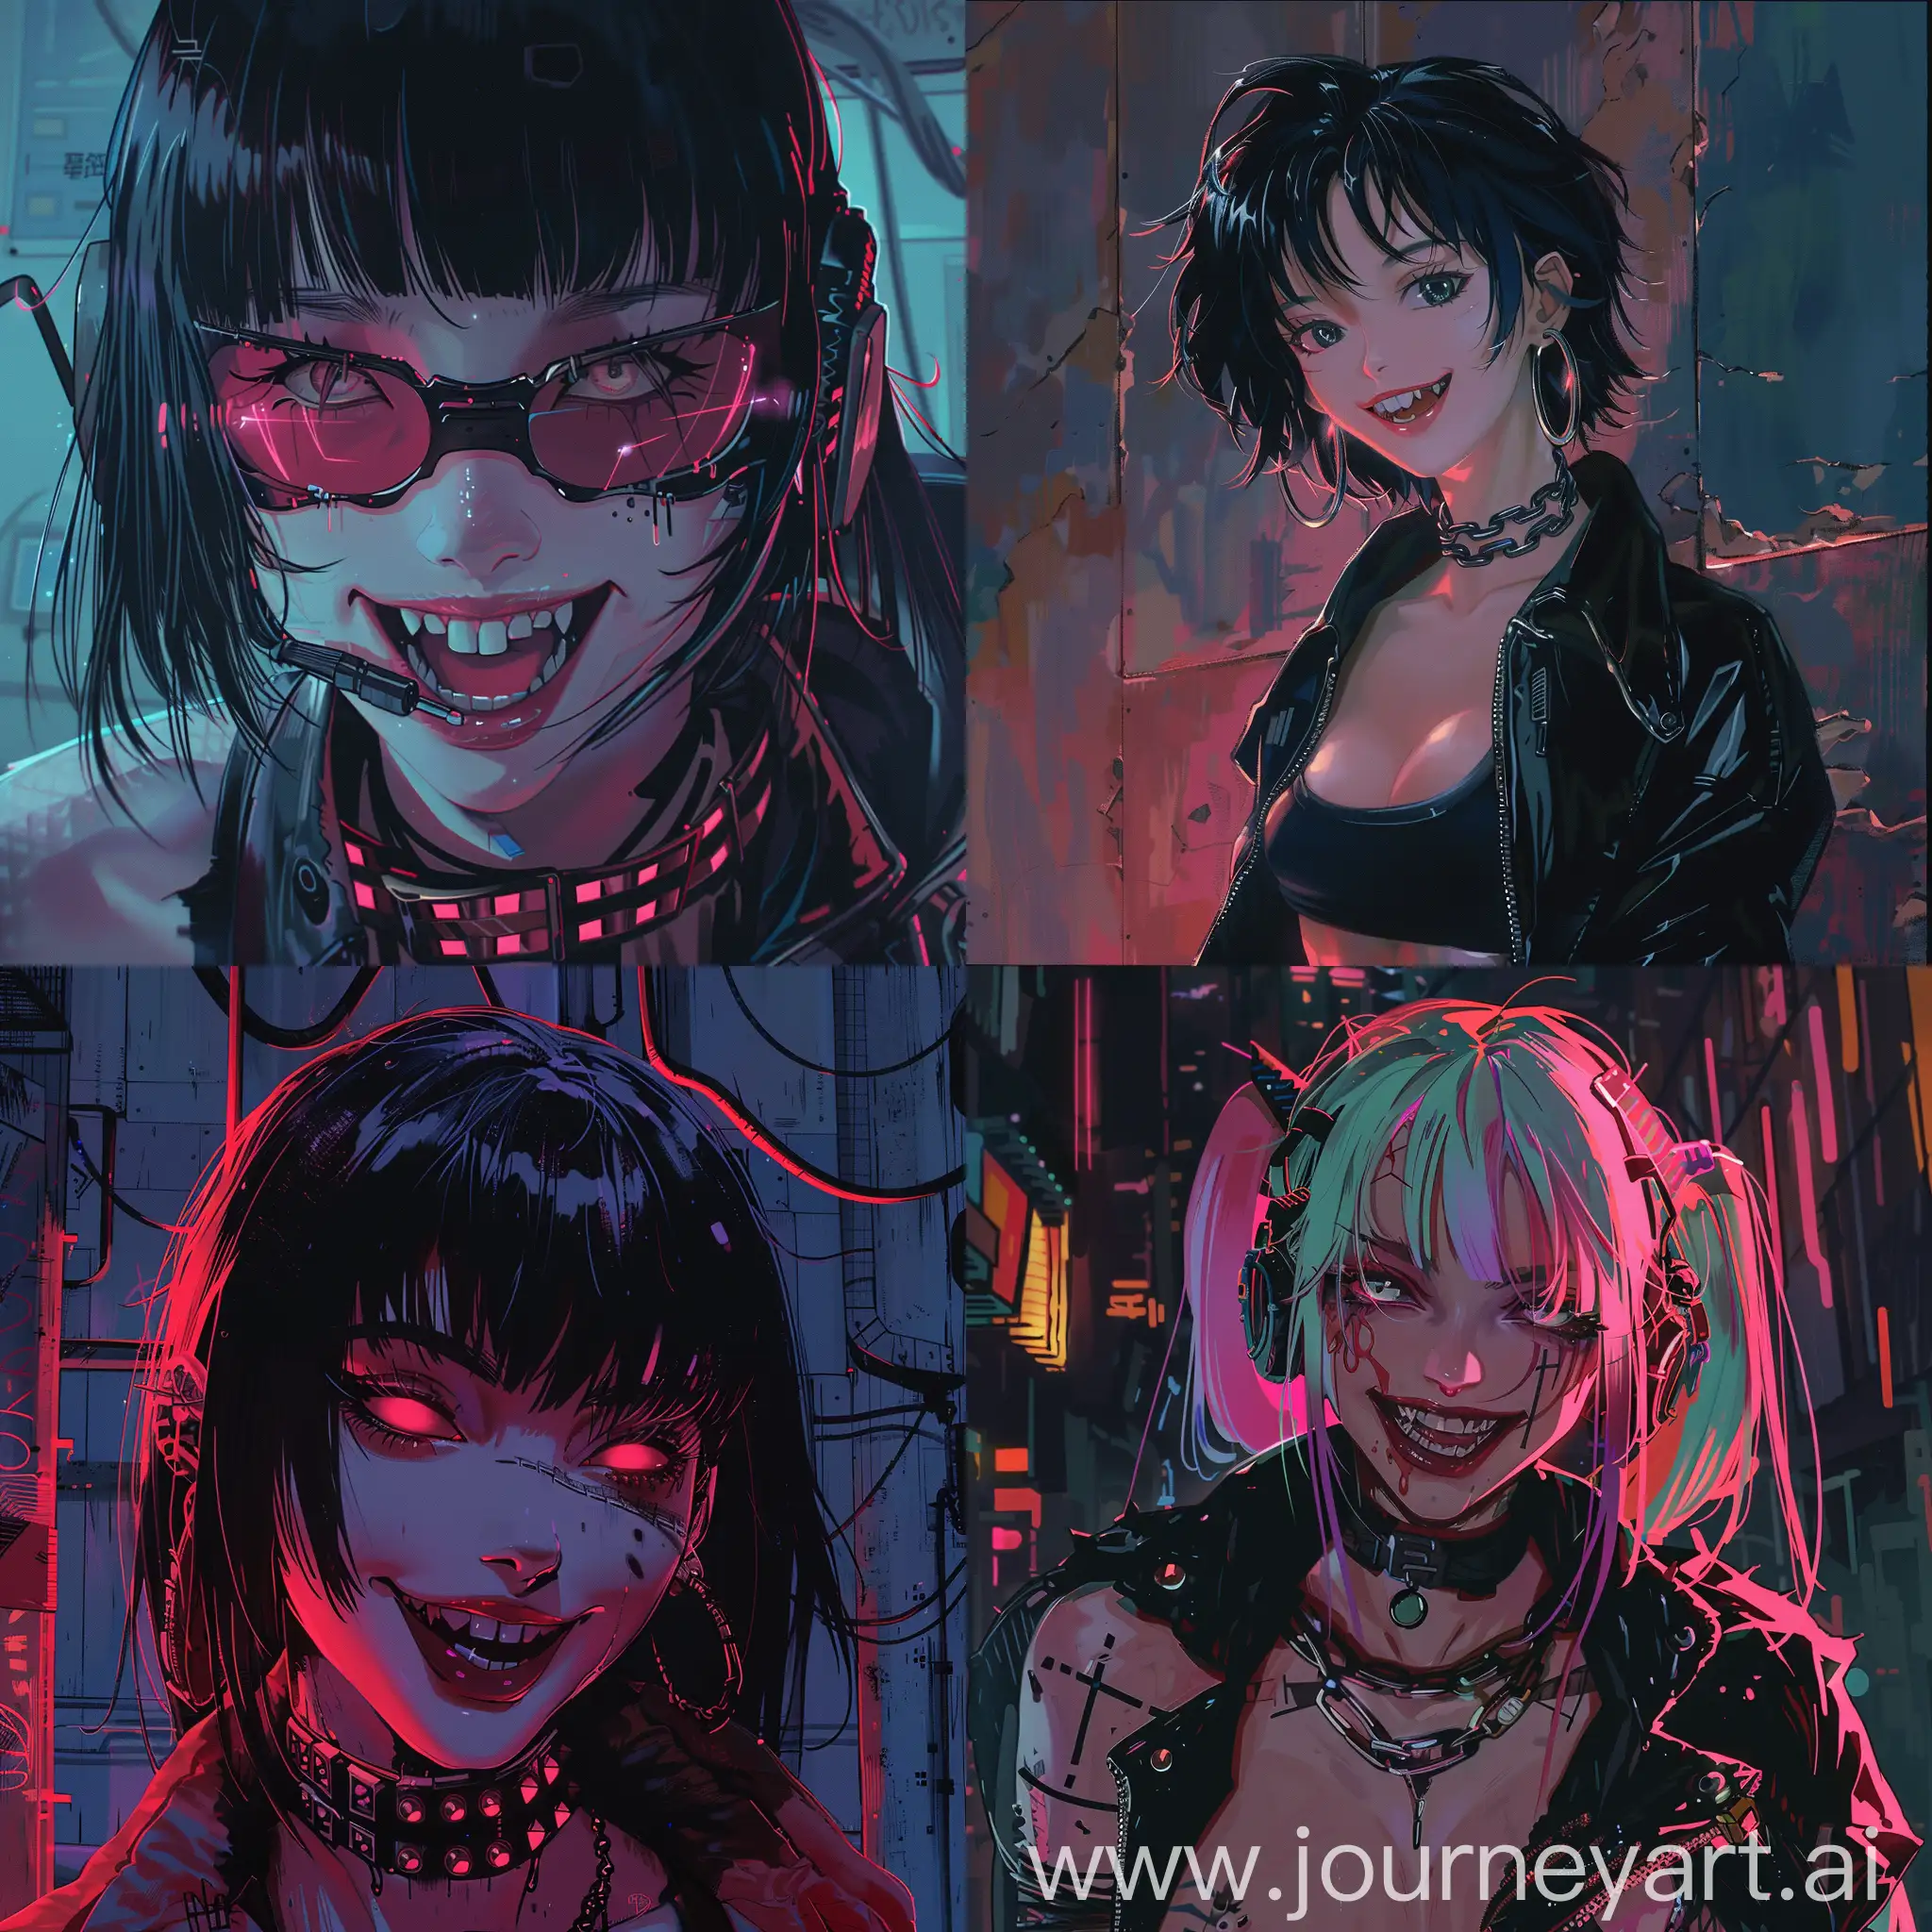 Smiling-Cyberpunk-Vampire-Girl-90s-Anime-Style-Art